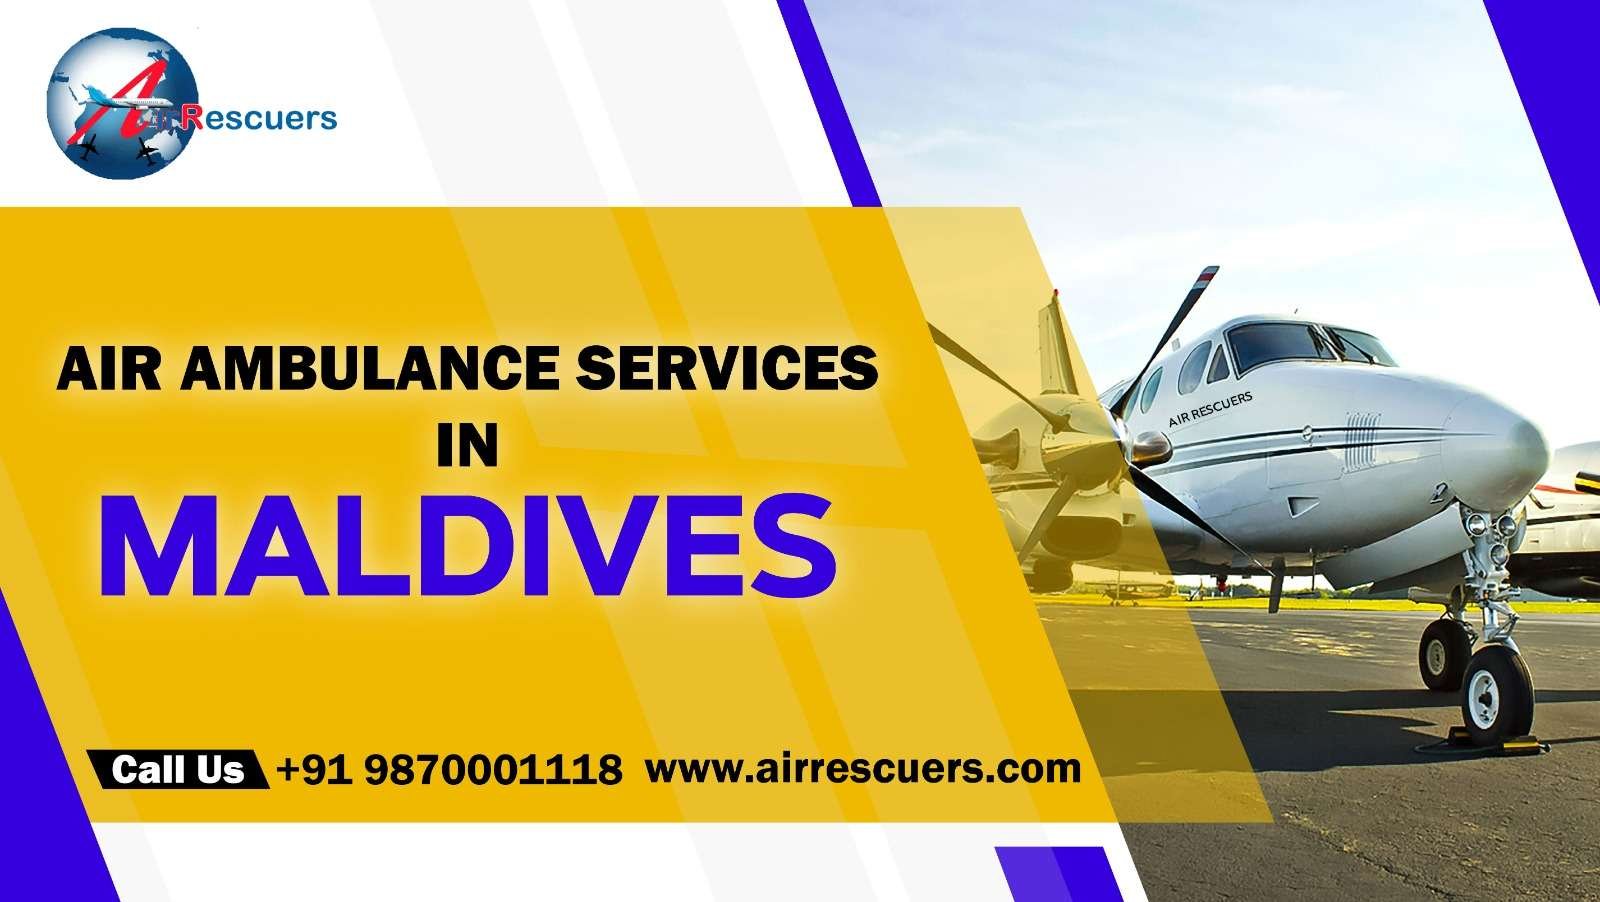 Air Ambulance Services in Maldives - Air Rescuers